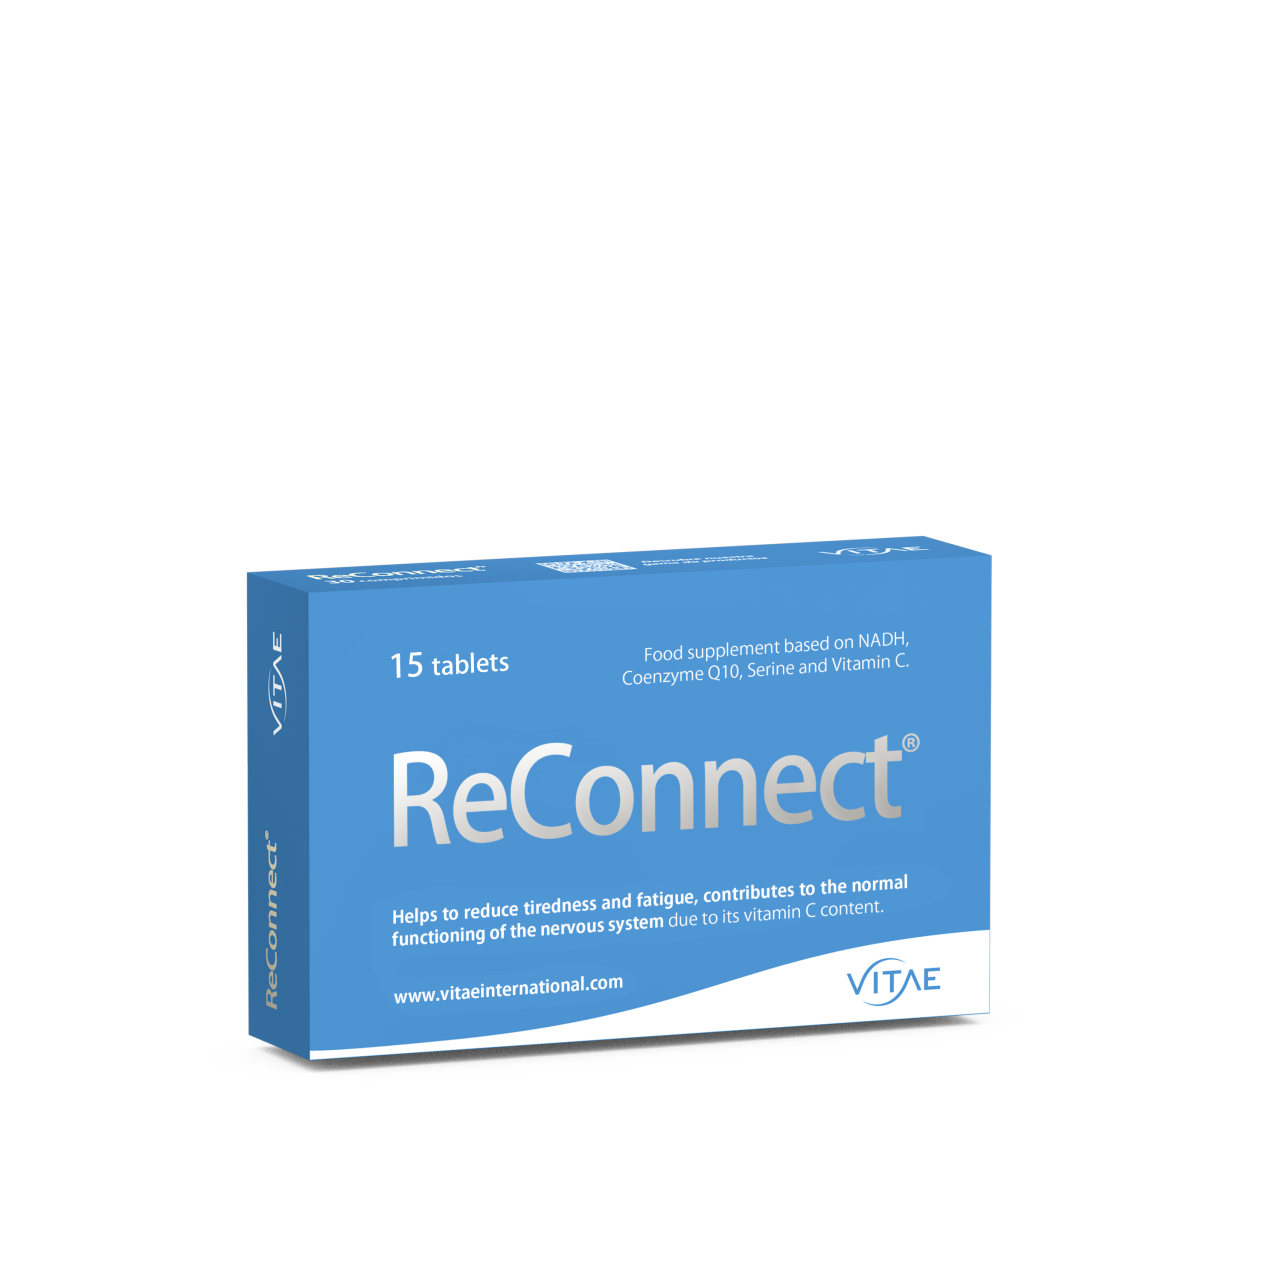 reconnect-tablete-apotekaonline-rs